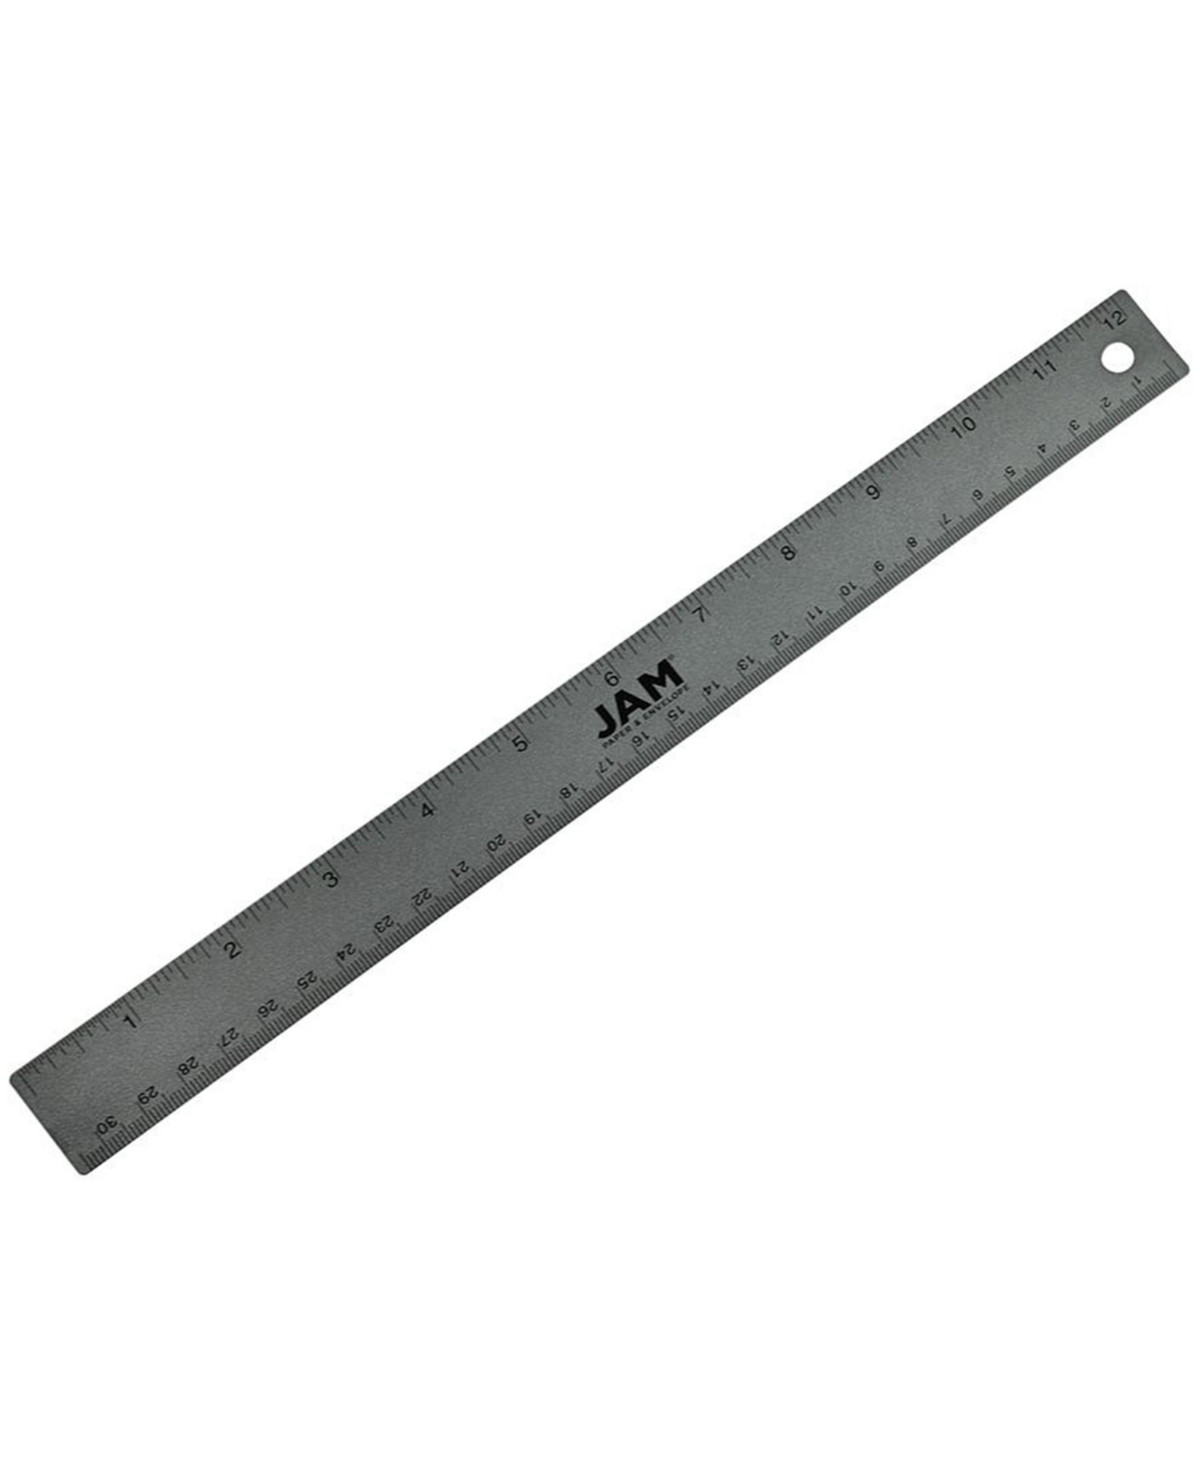 Strong Aluminum Ruler - 12" - Metal Ruler with Non-Skid Cork Backing - Gray Metallic